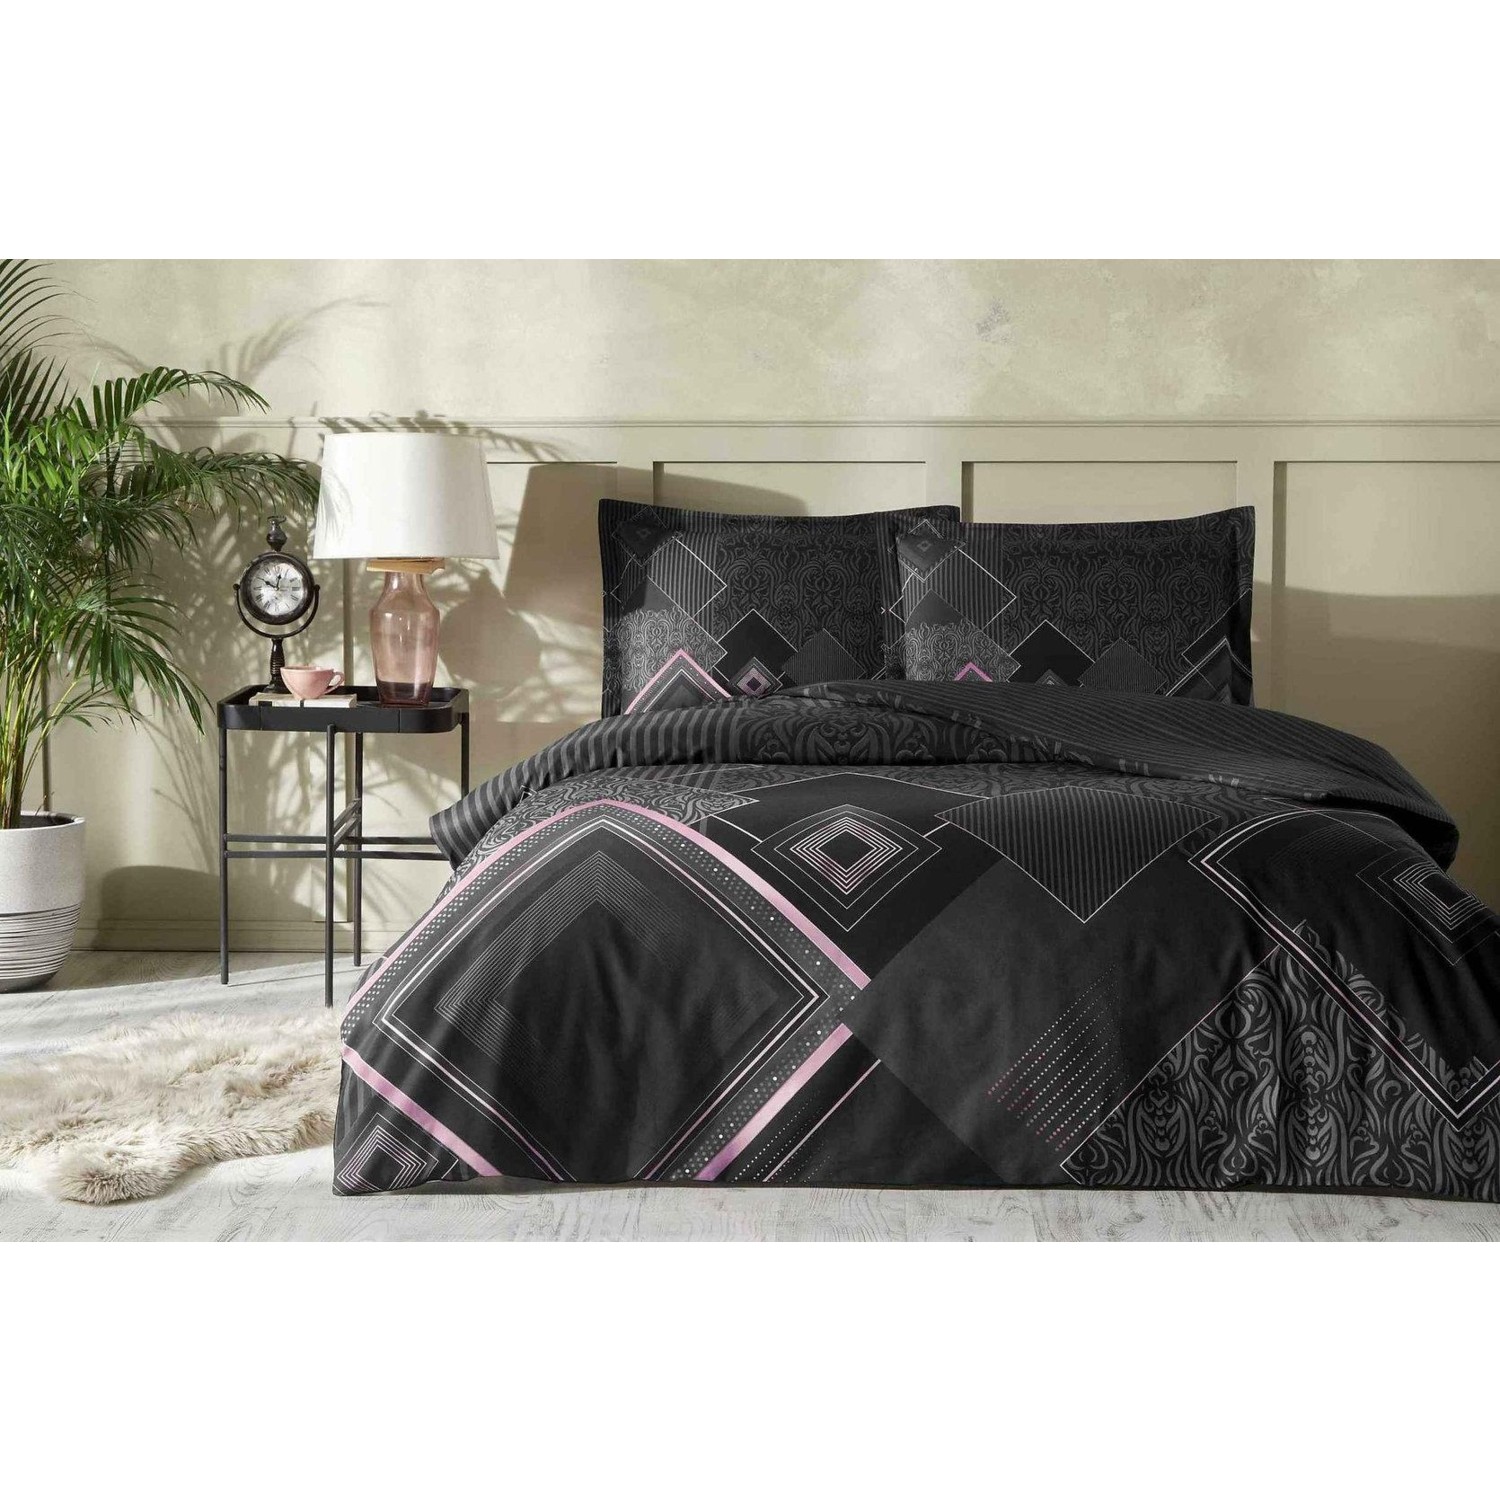 Комплект постельного белья Ozdilek Snazzy Black Pink King Size